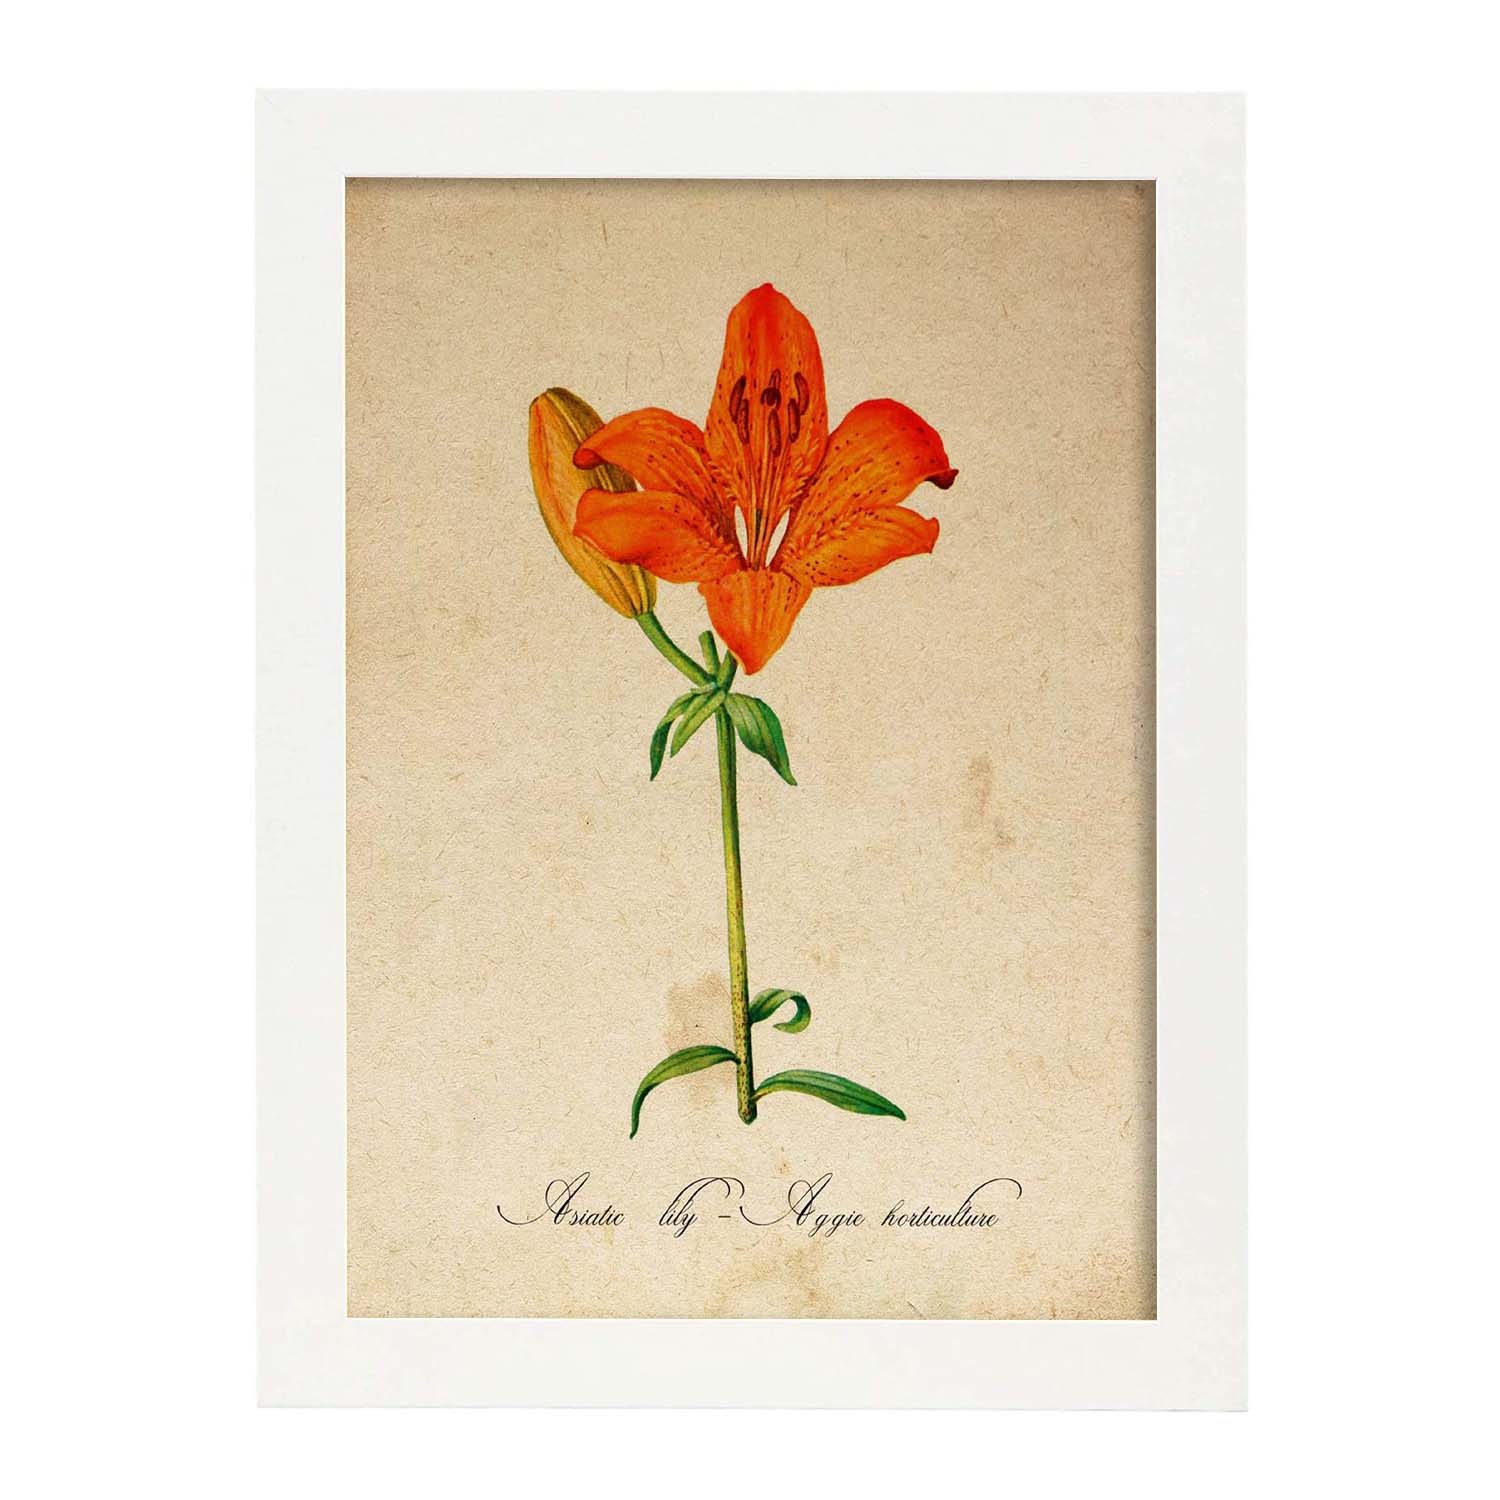 Poster de flores vintage. Lámina Asiatic Lily - Aggie Horticulture con diseño vintage.-Artwork-Nacnic-A3-Marco Blanco-Nacnic Estudio SL